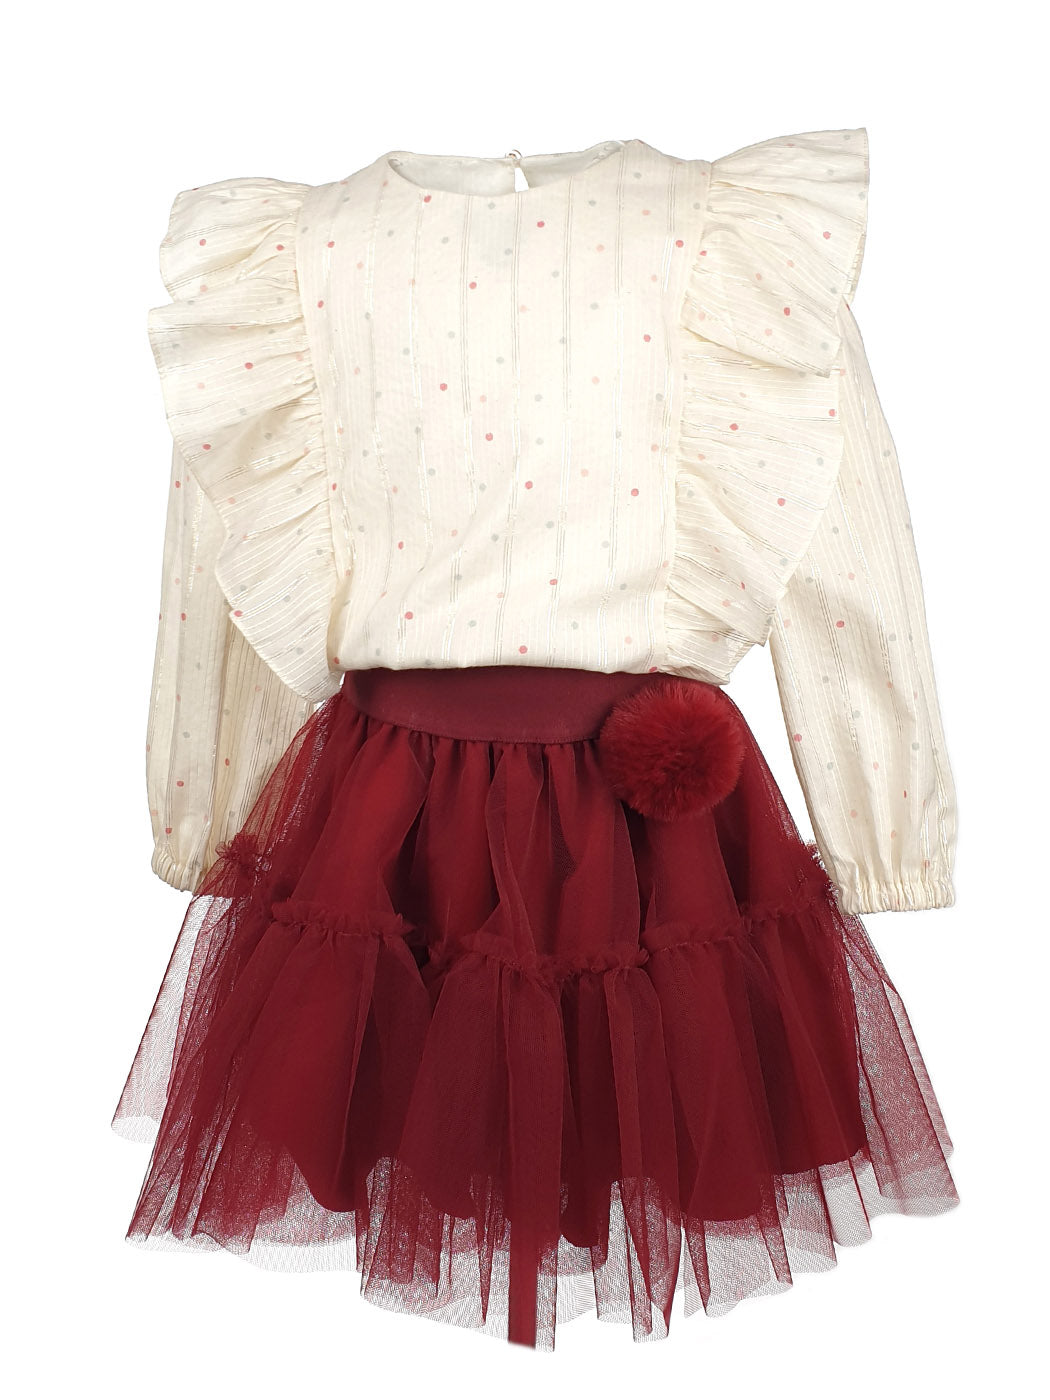 BROOKE Burgundy Tutu tulle skirt with ruffles